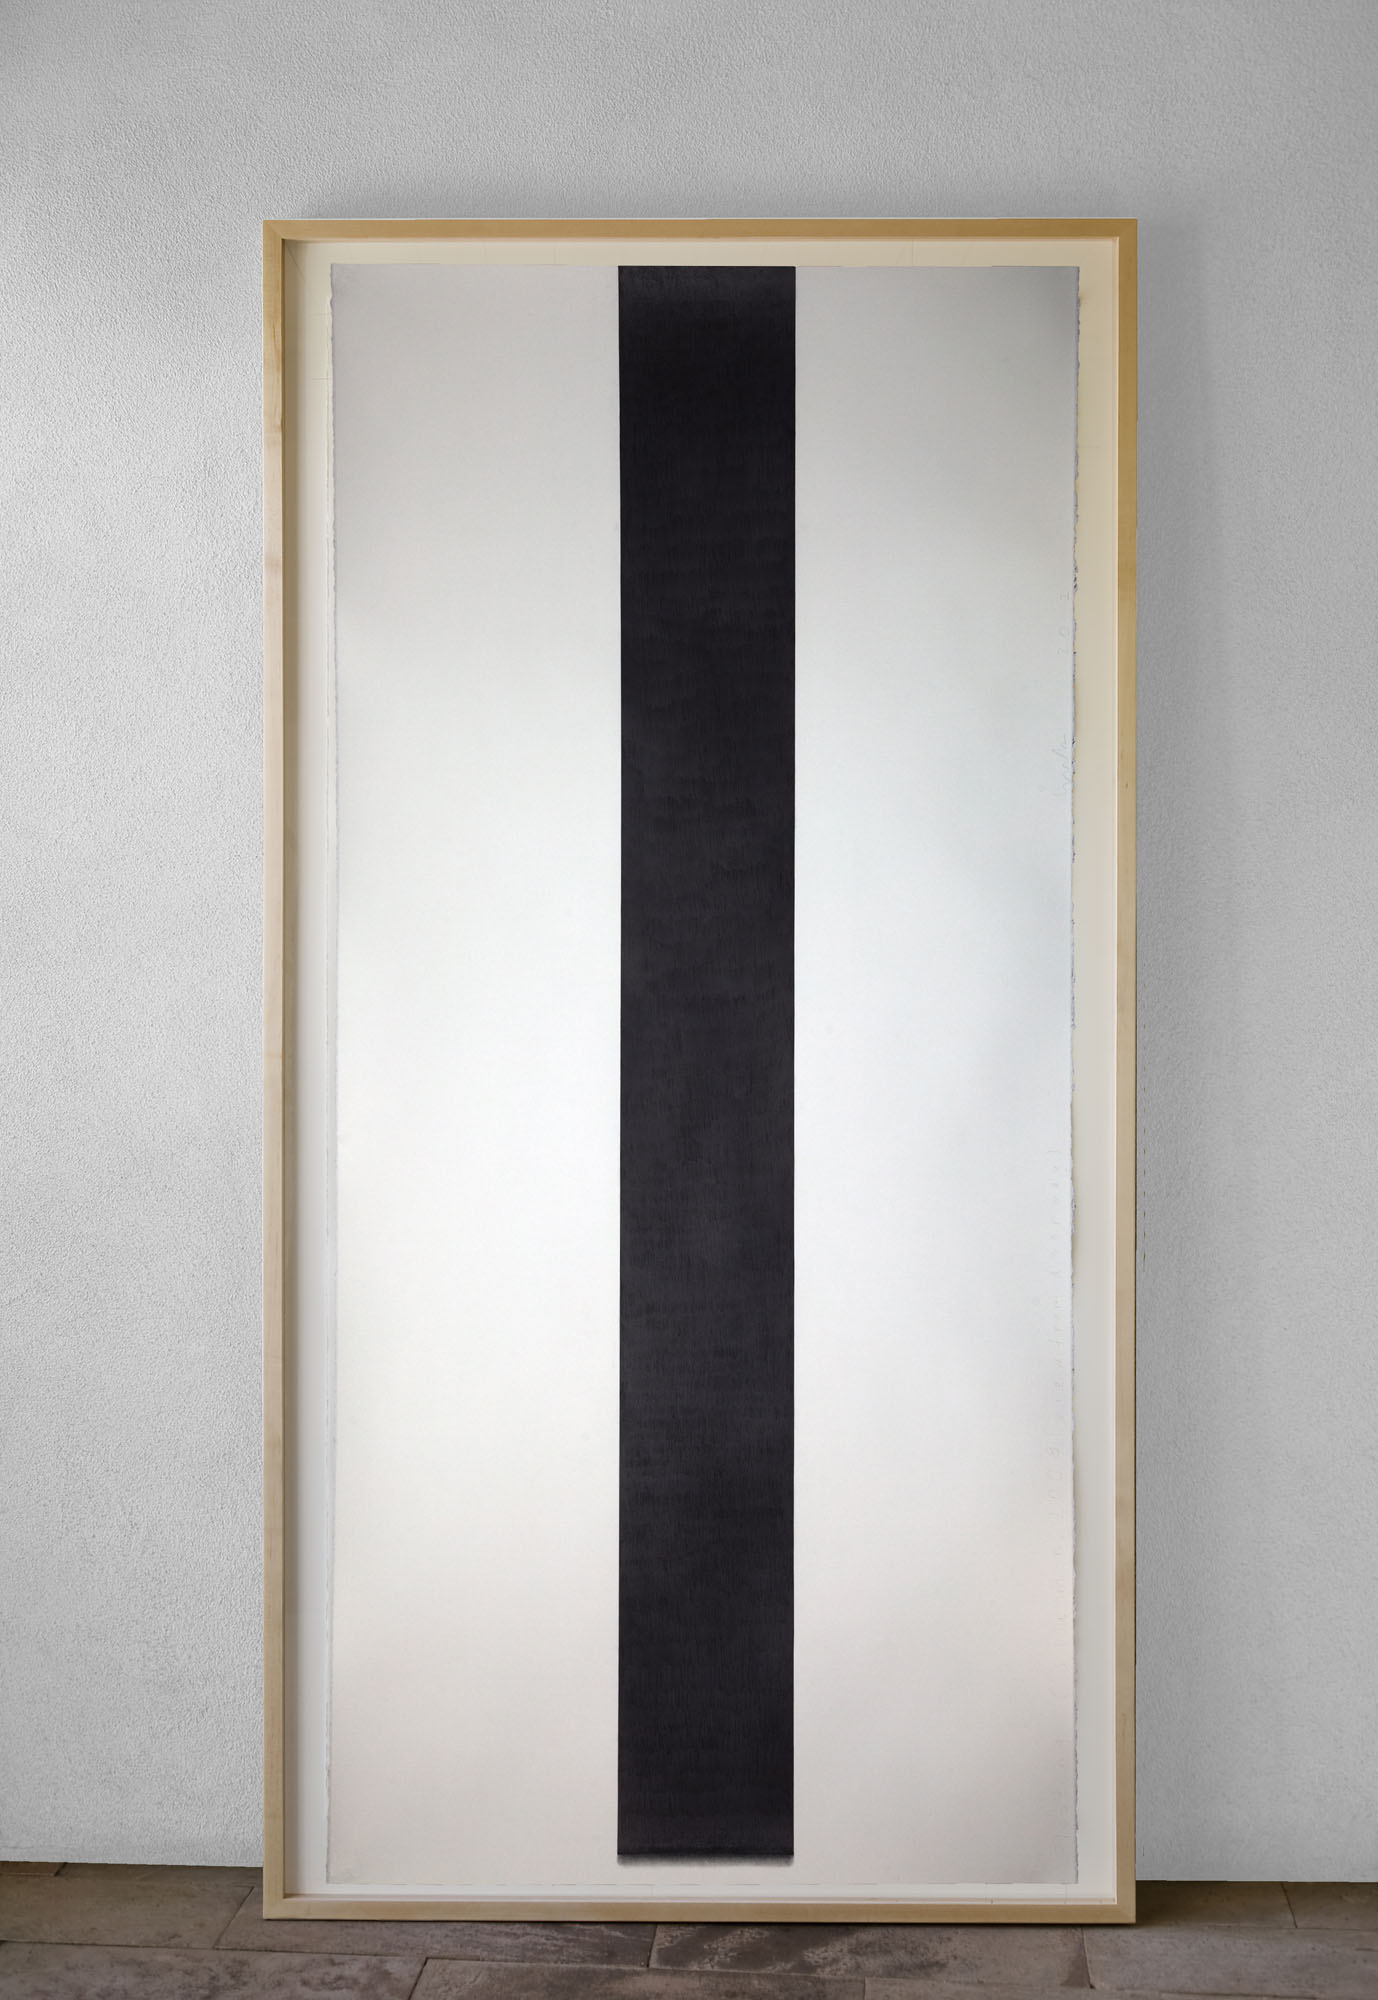   Floating Column   Graphite pencil on paper,&nbsp;97.63” x 50” (framed) 